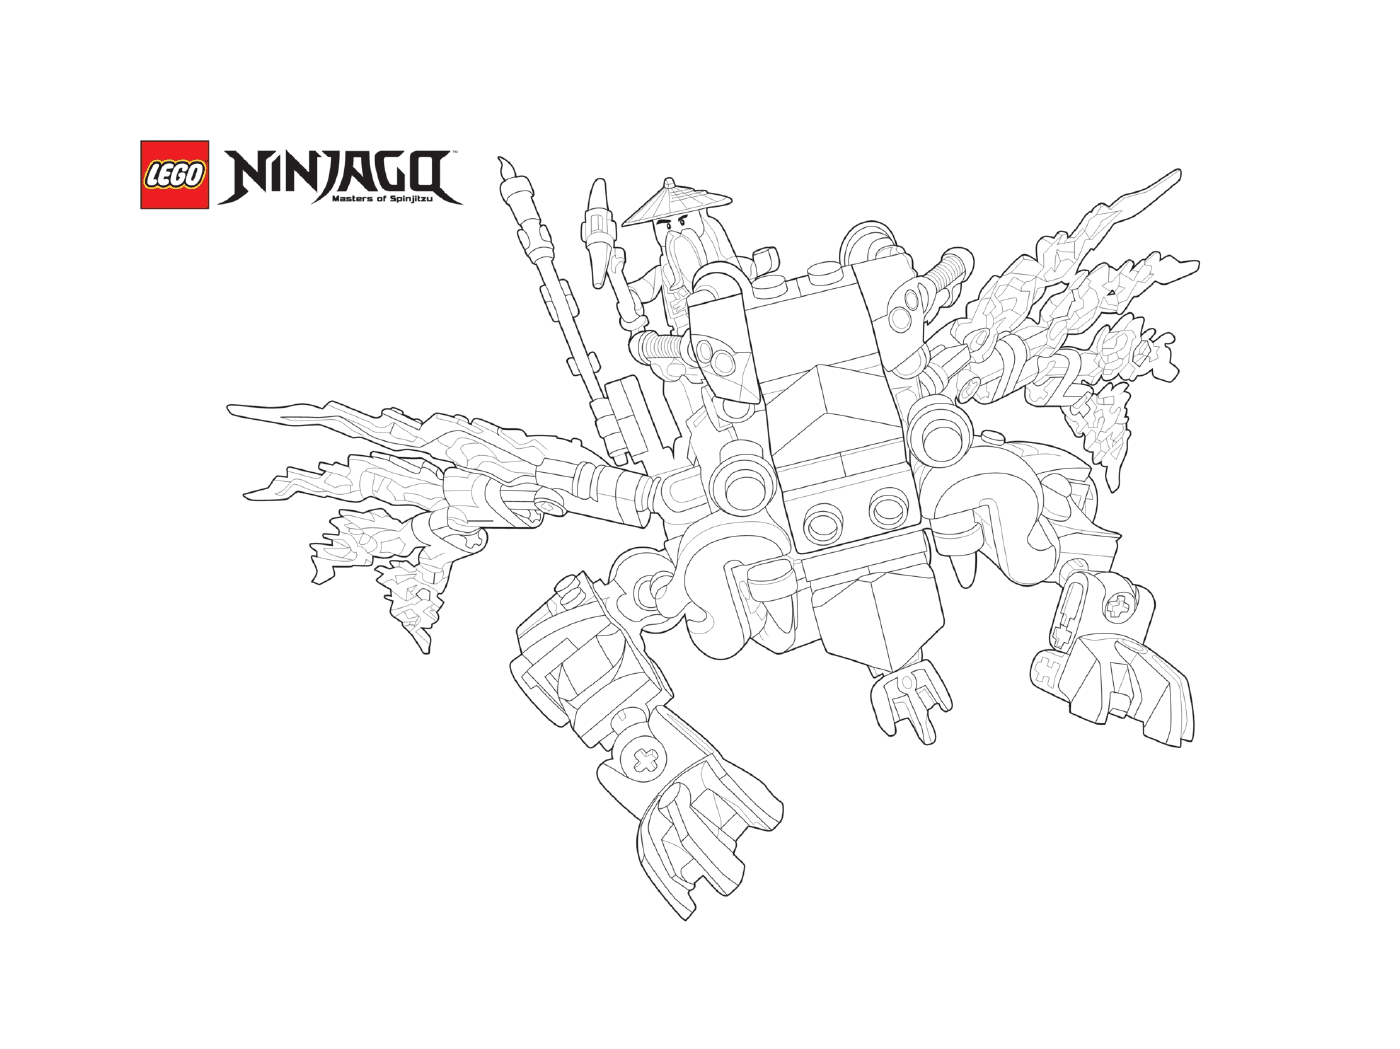  Ninjago on dragon in speed 